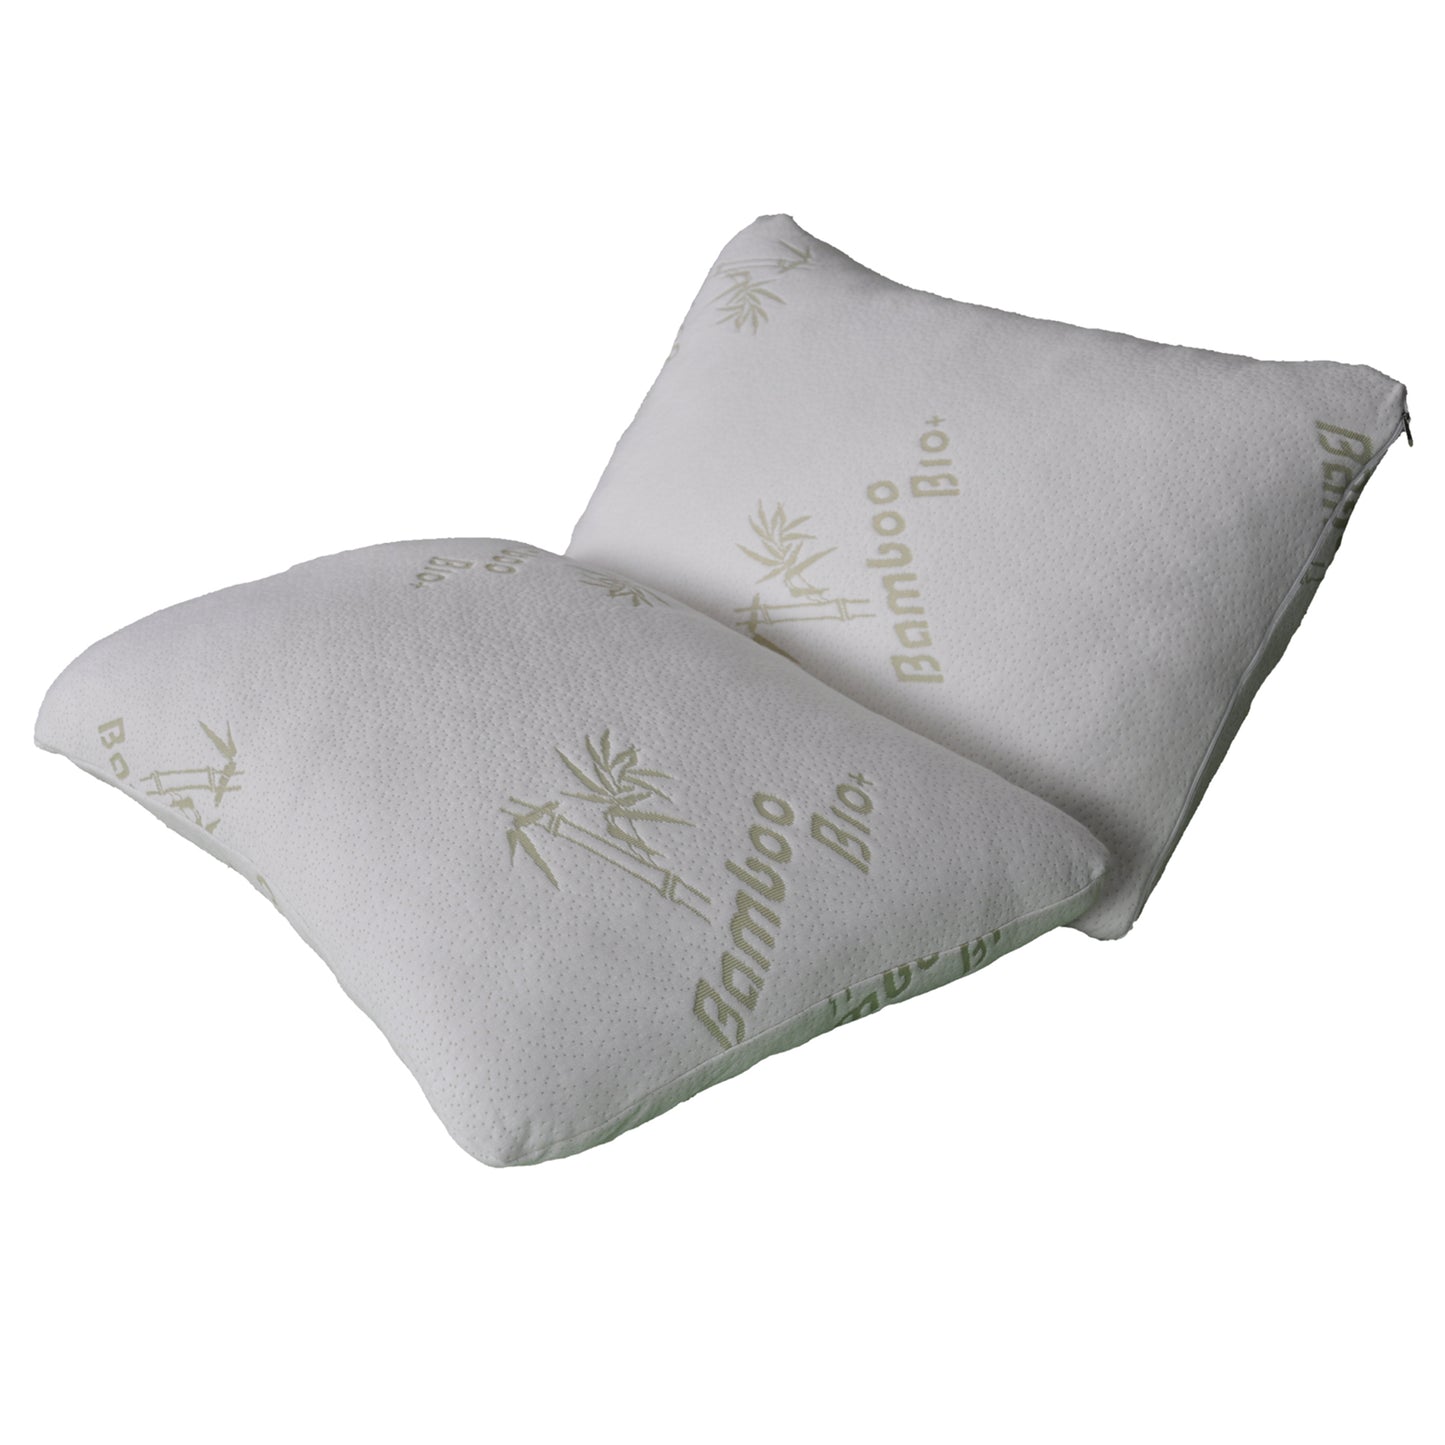 Royalty Comfort HG-5076BMC: Bamboo Pillow Cover